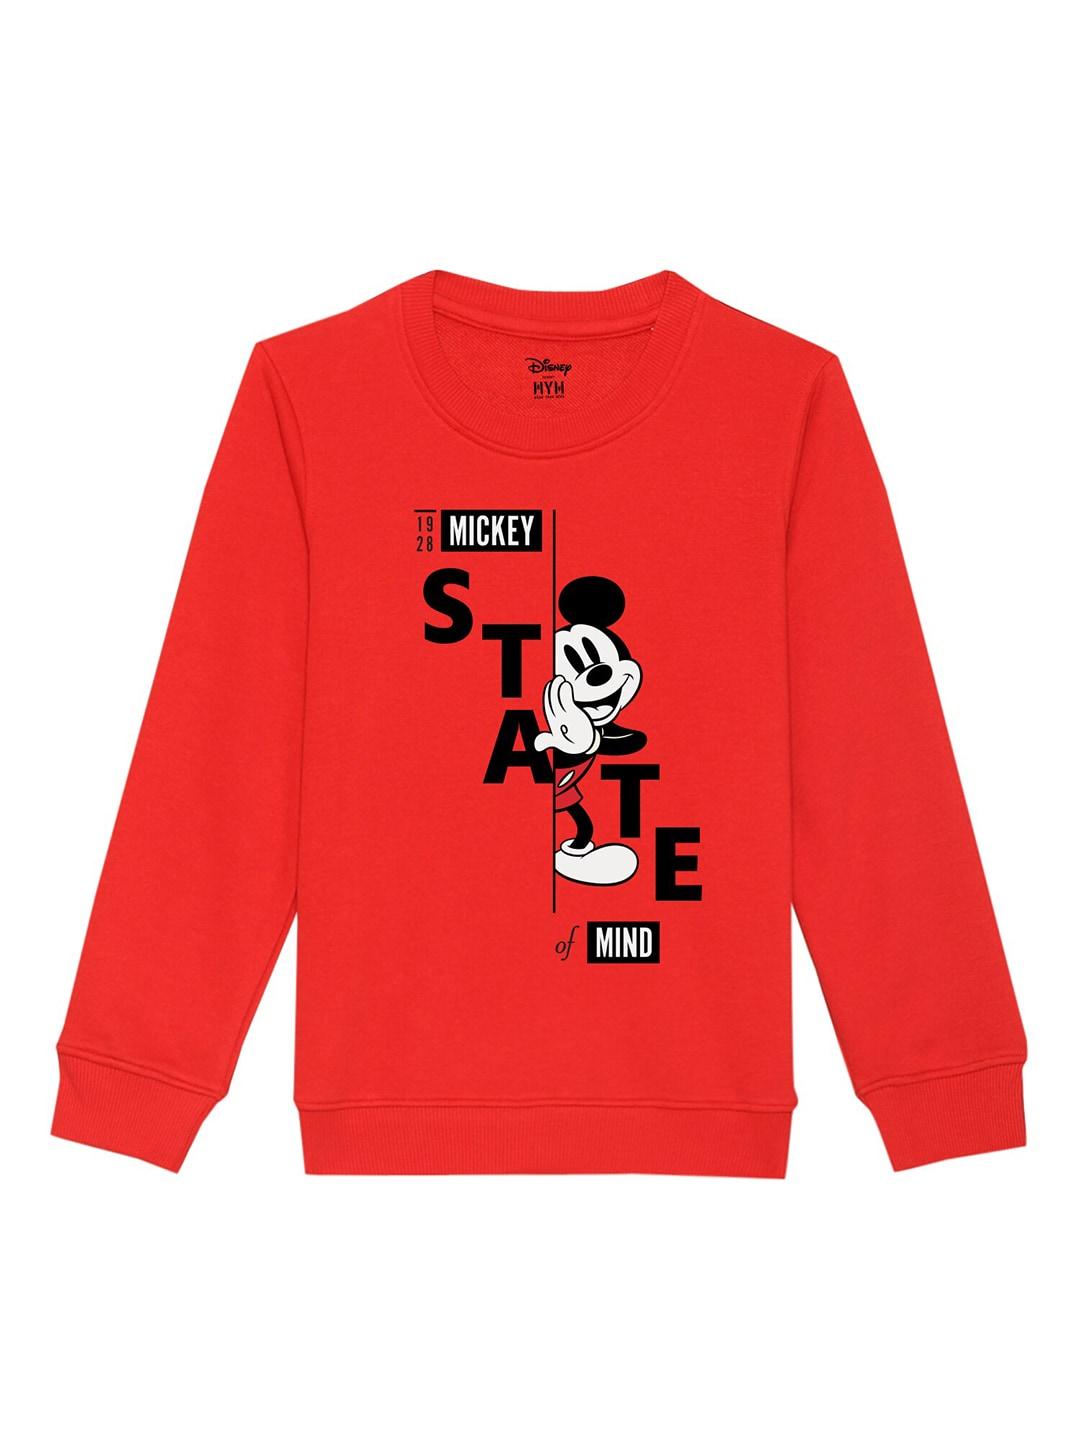 Disney by Wear Your Mind Boys Red Printed Sweatshirt